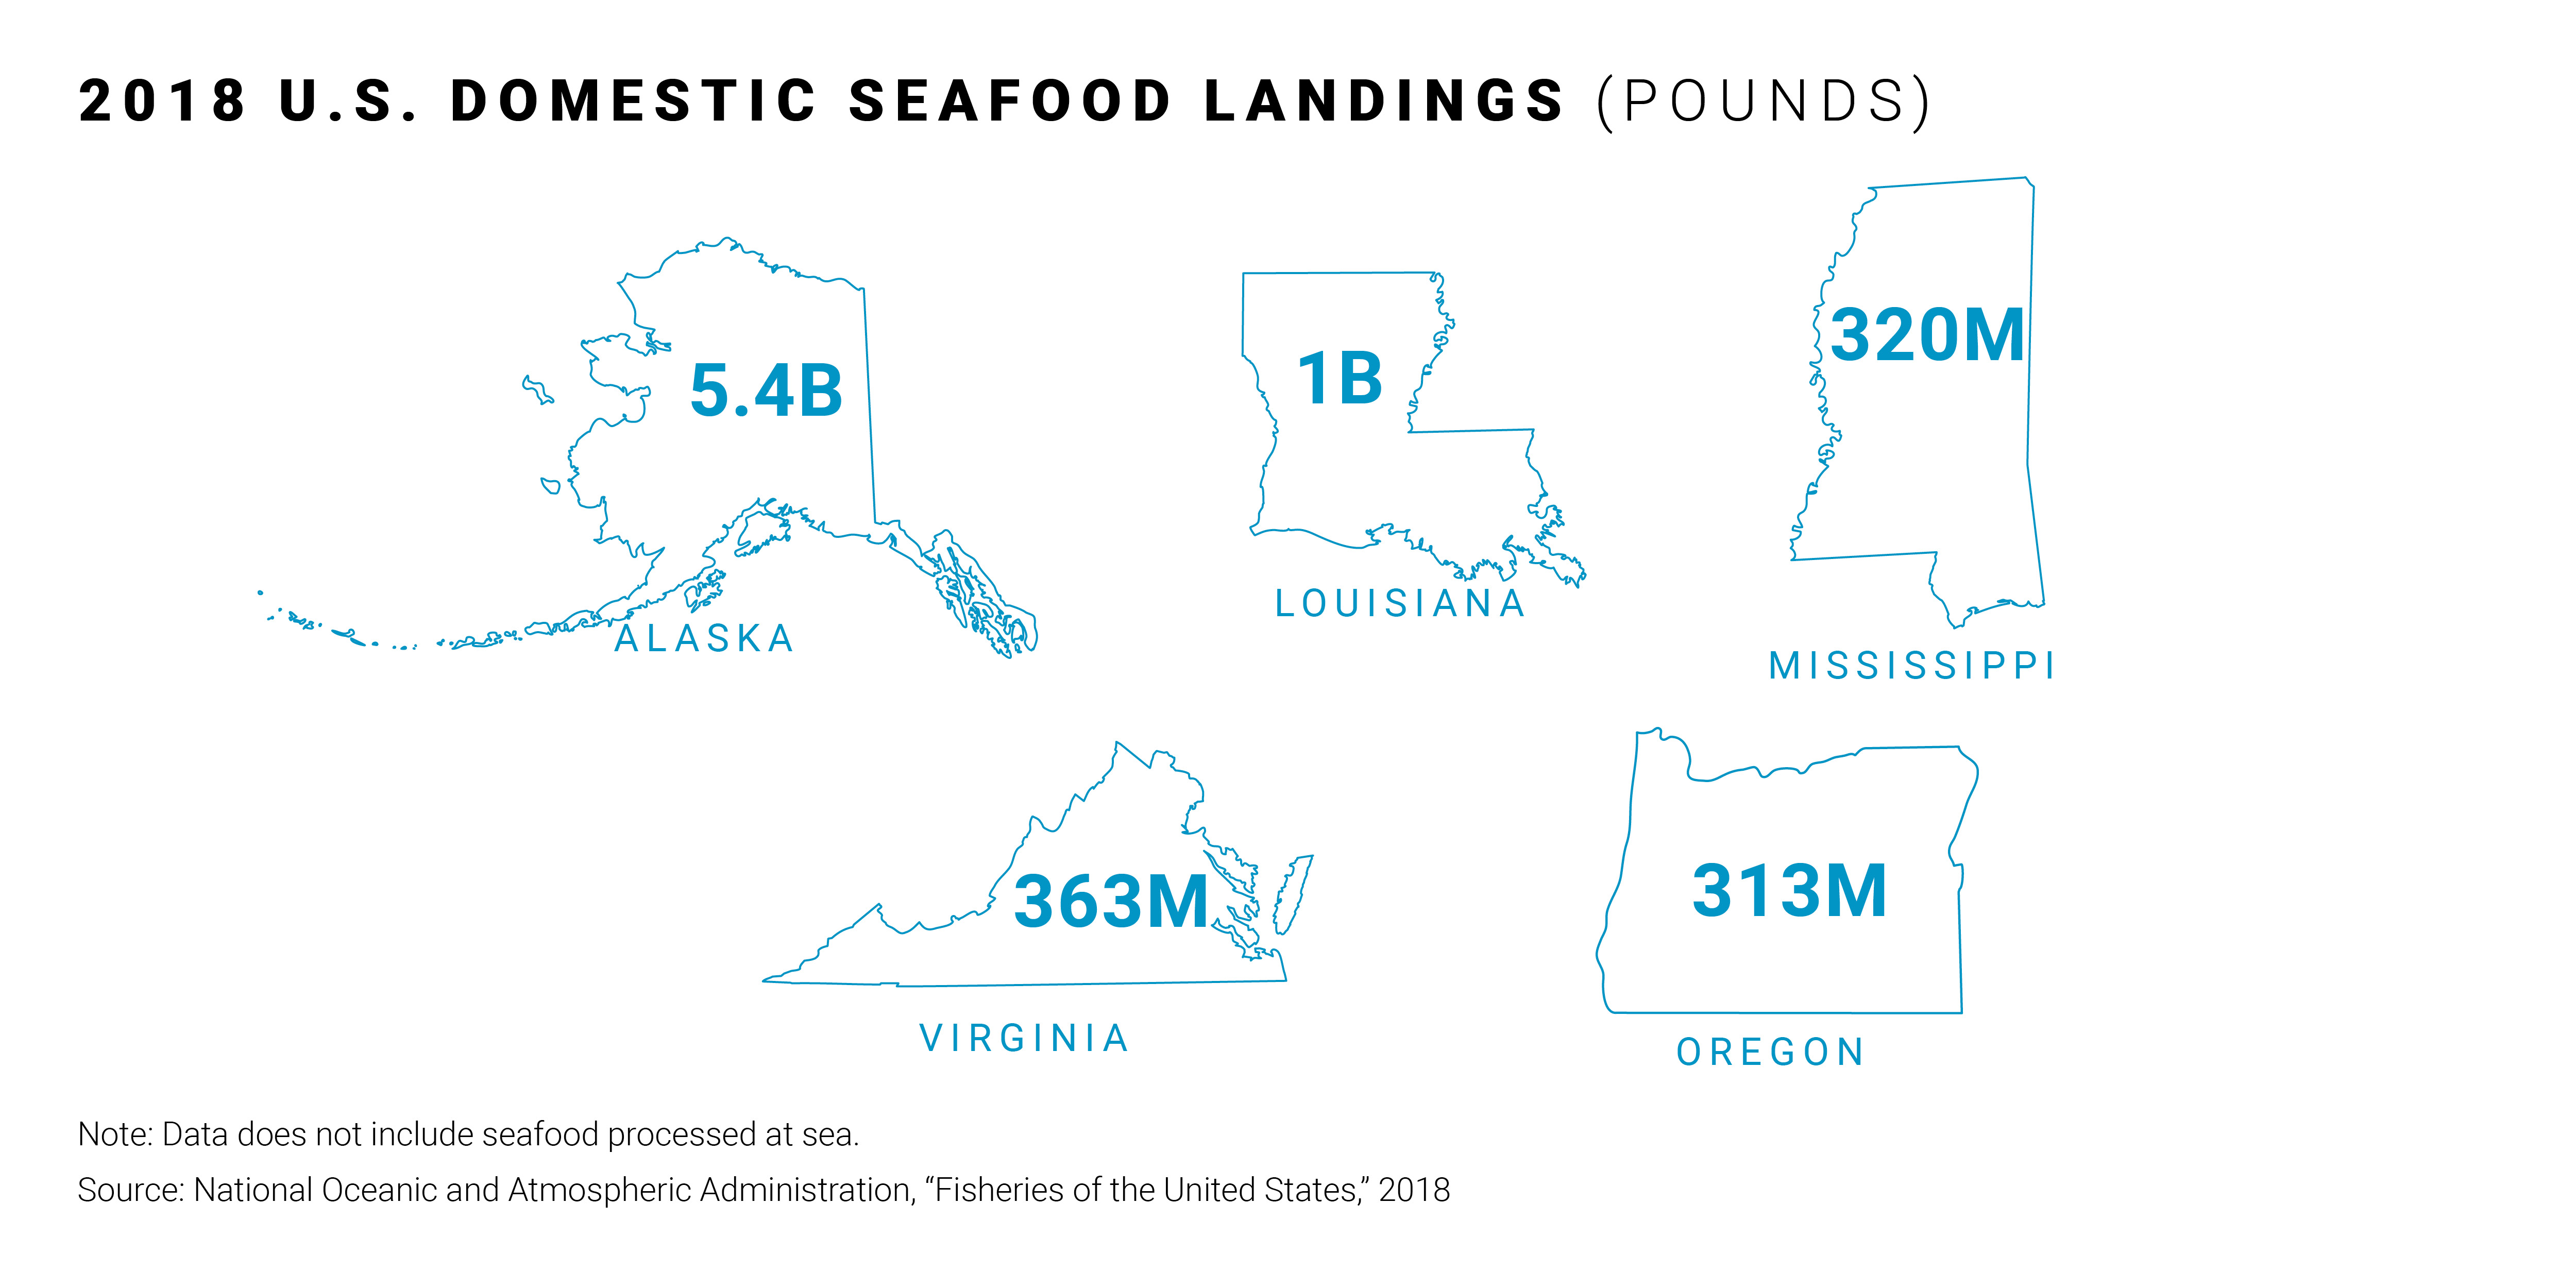 2018 U.S. Domestic Seafood Landings